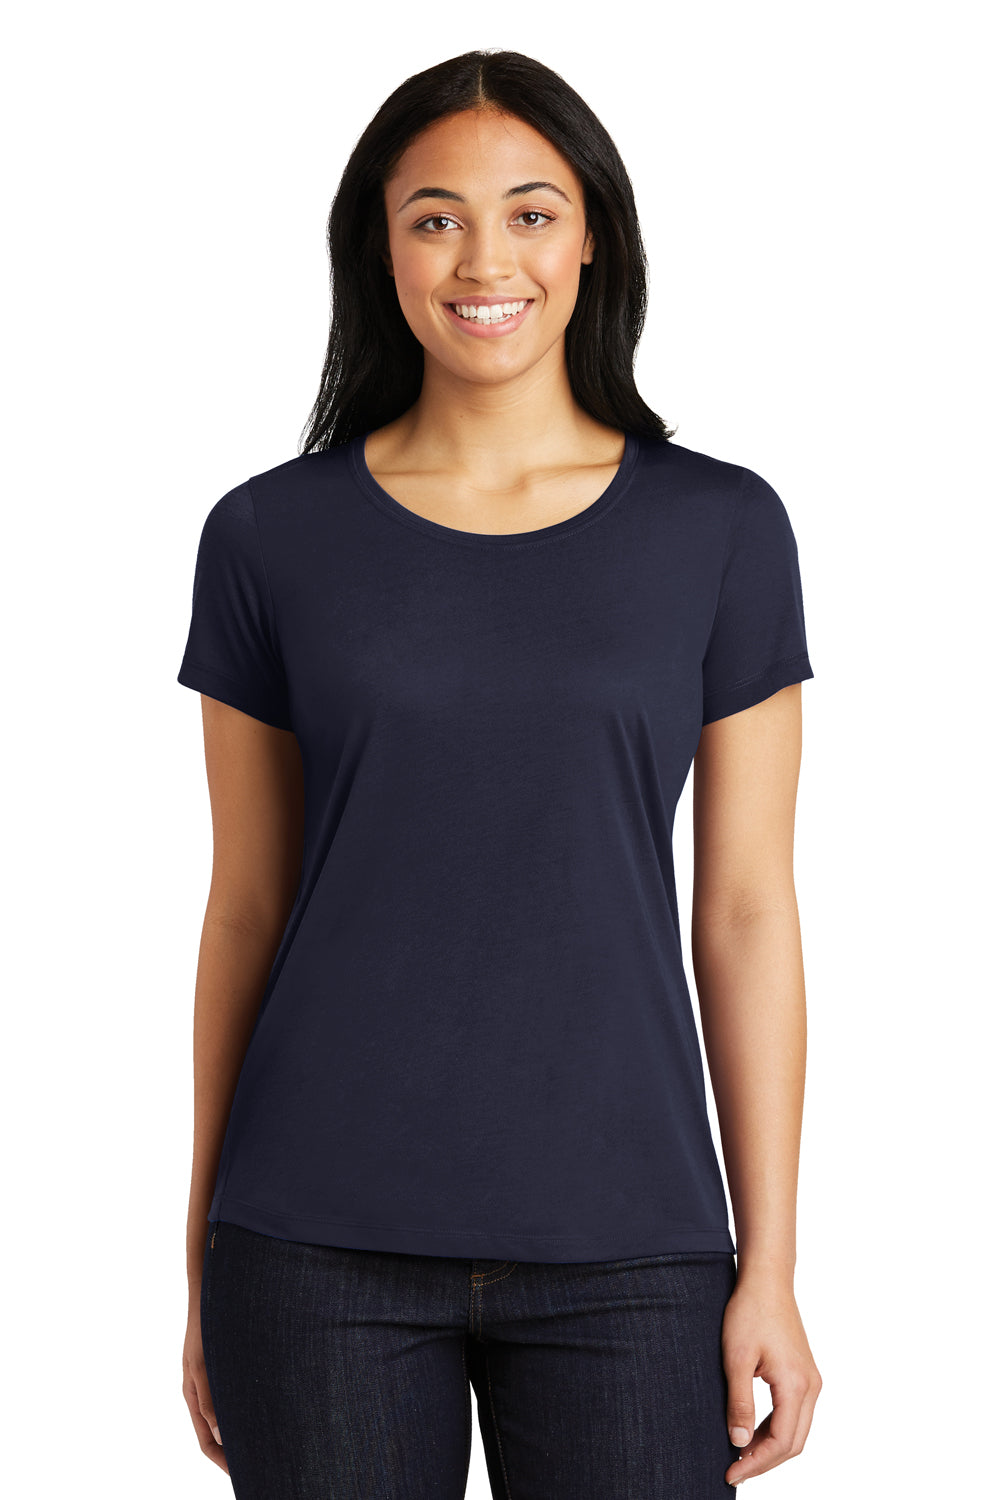 Sport-Tek LST450 Womens Competitor Moisture Wicking Short Sleeve Scoop Neck T-Shirt Navy Blue Front